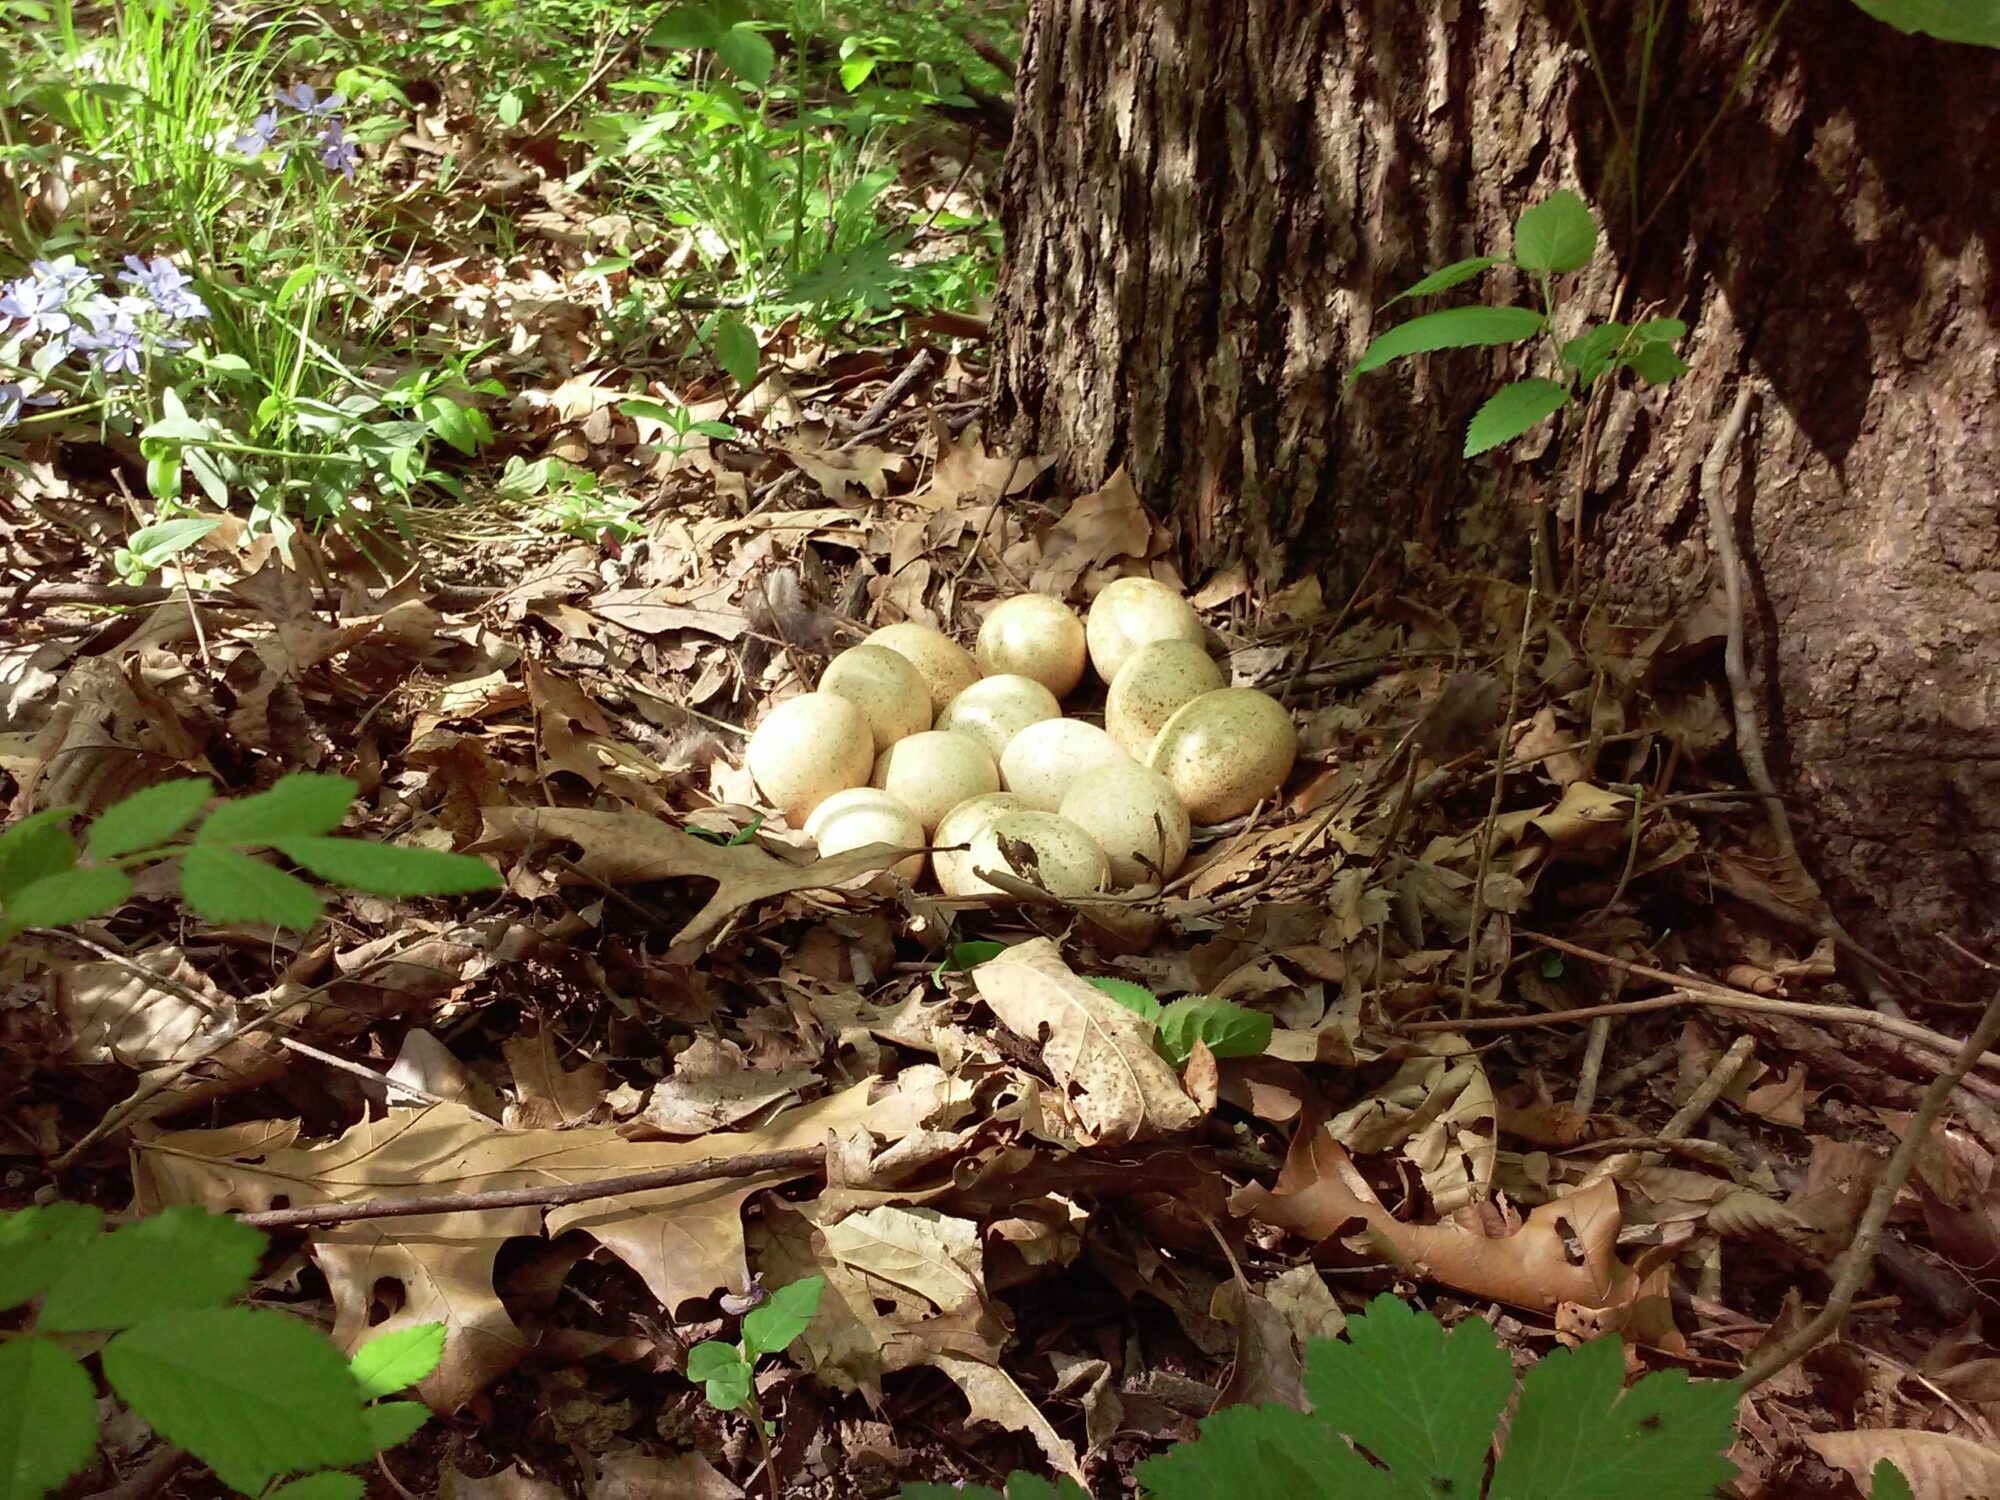 turkey eggs in a nest